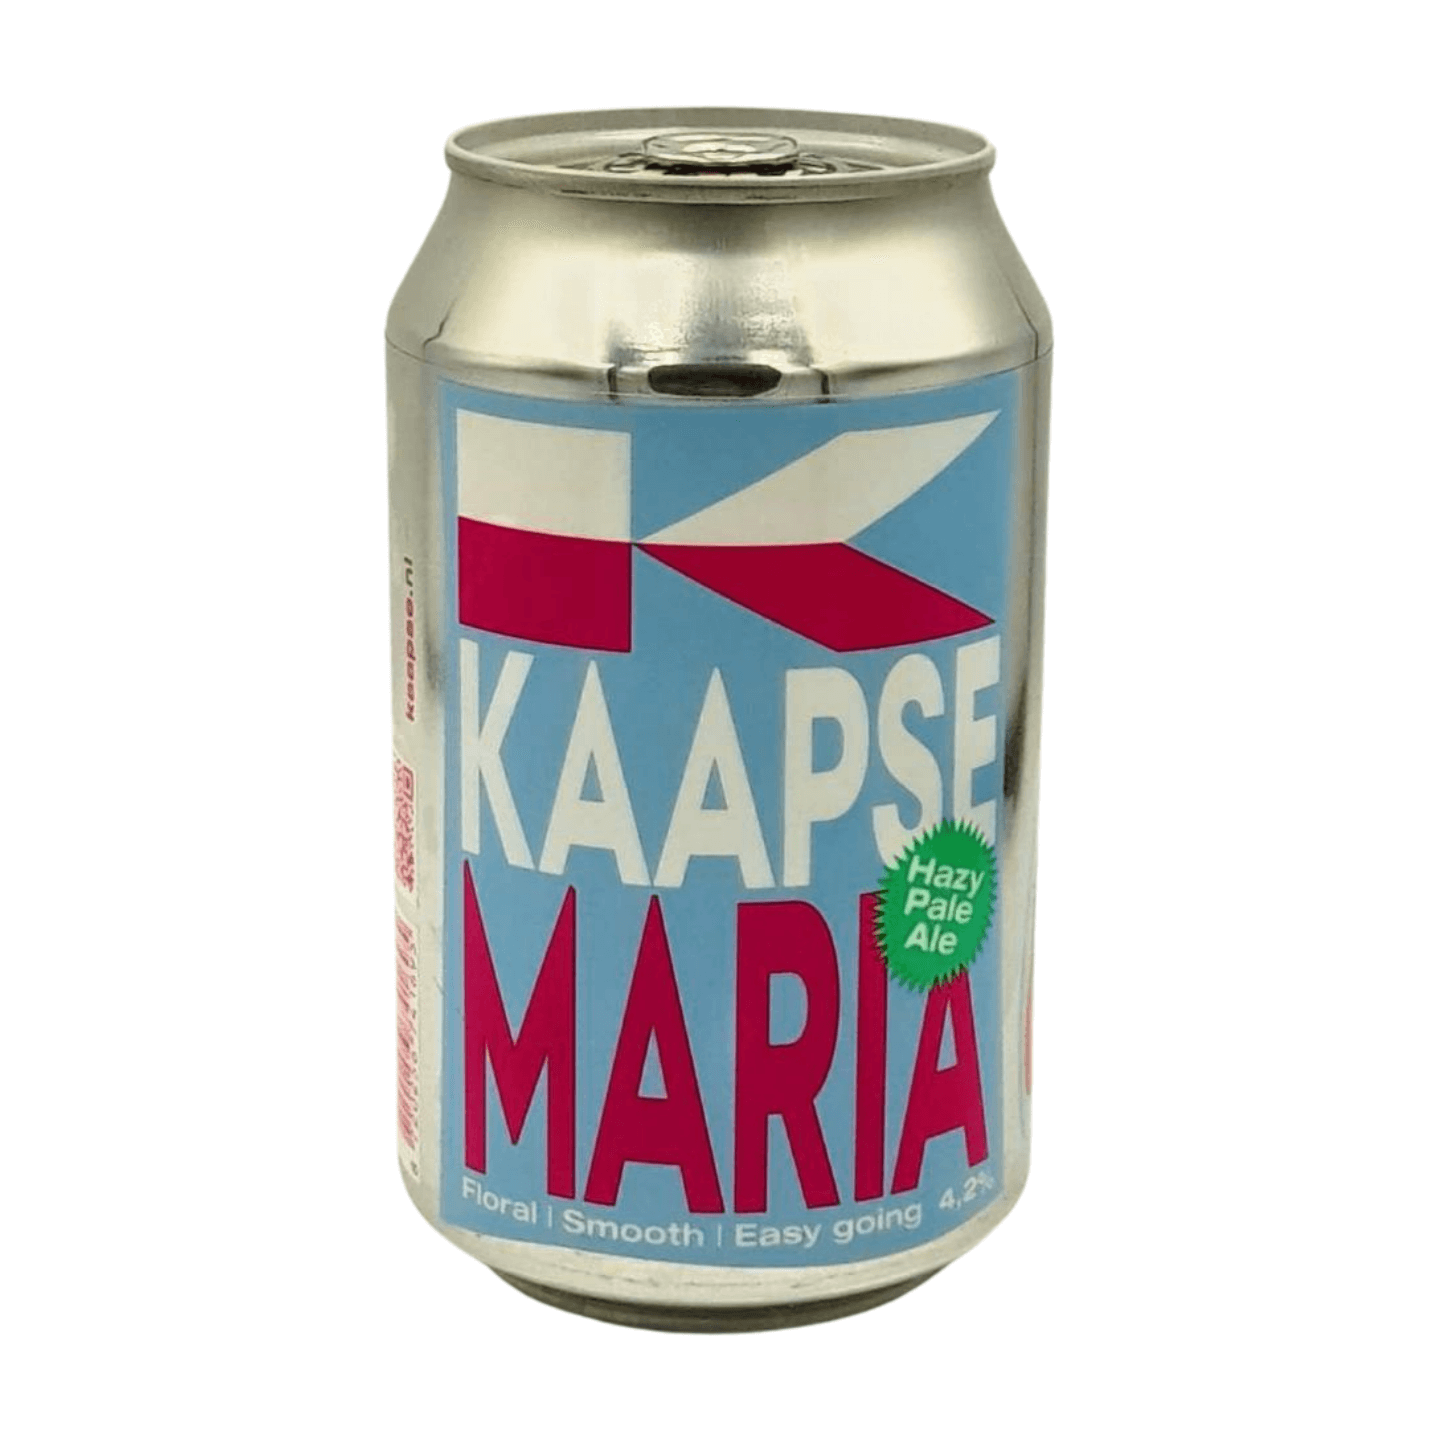 Kaapse Brouwers Maria | Hazy Pale Ale Webshop Online Verdins Bierwinkel Rotterdam